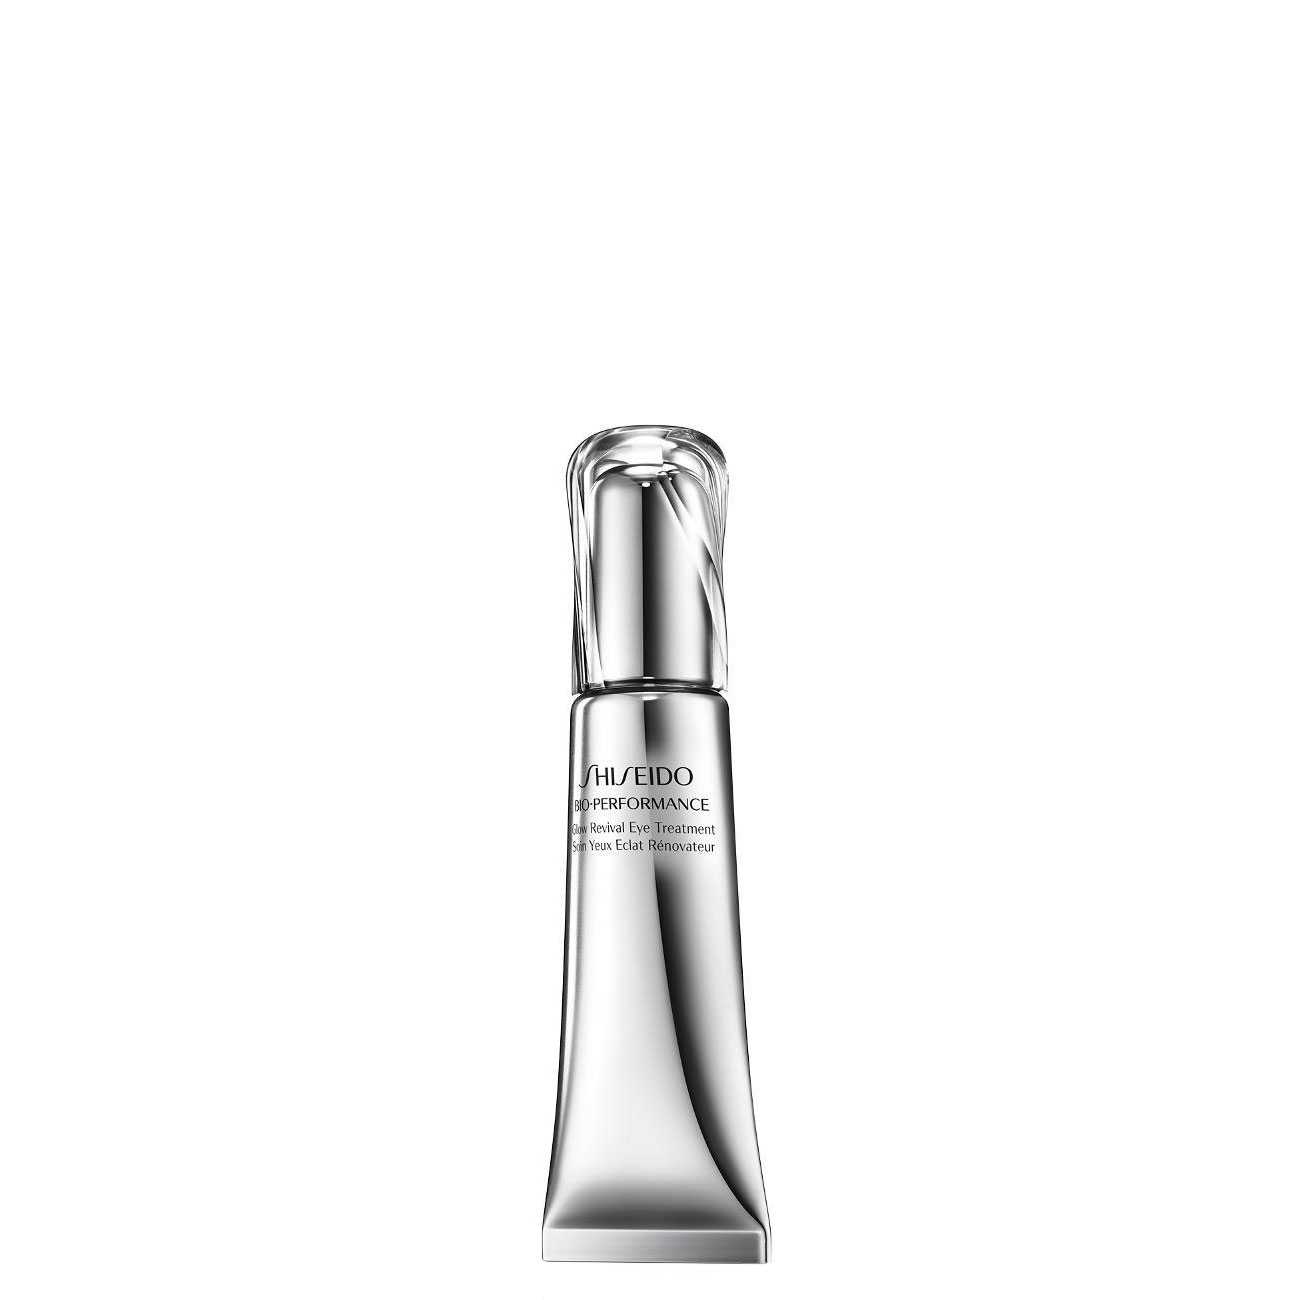 BIO PERFORMANCE GLOW REVIVAL Shiseido bestvalue.eu